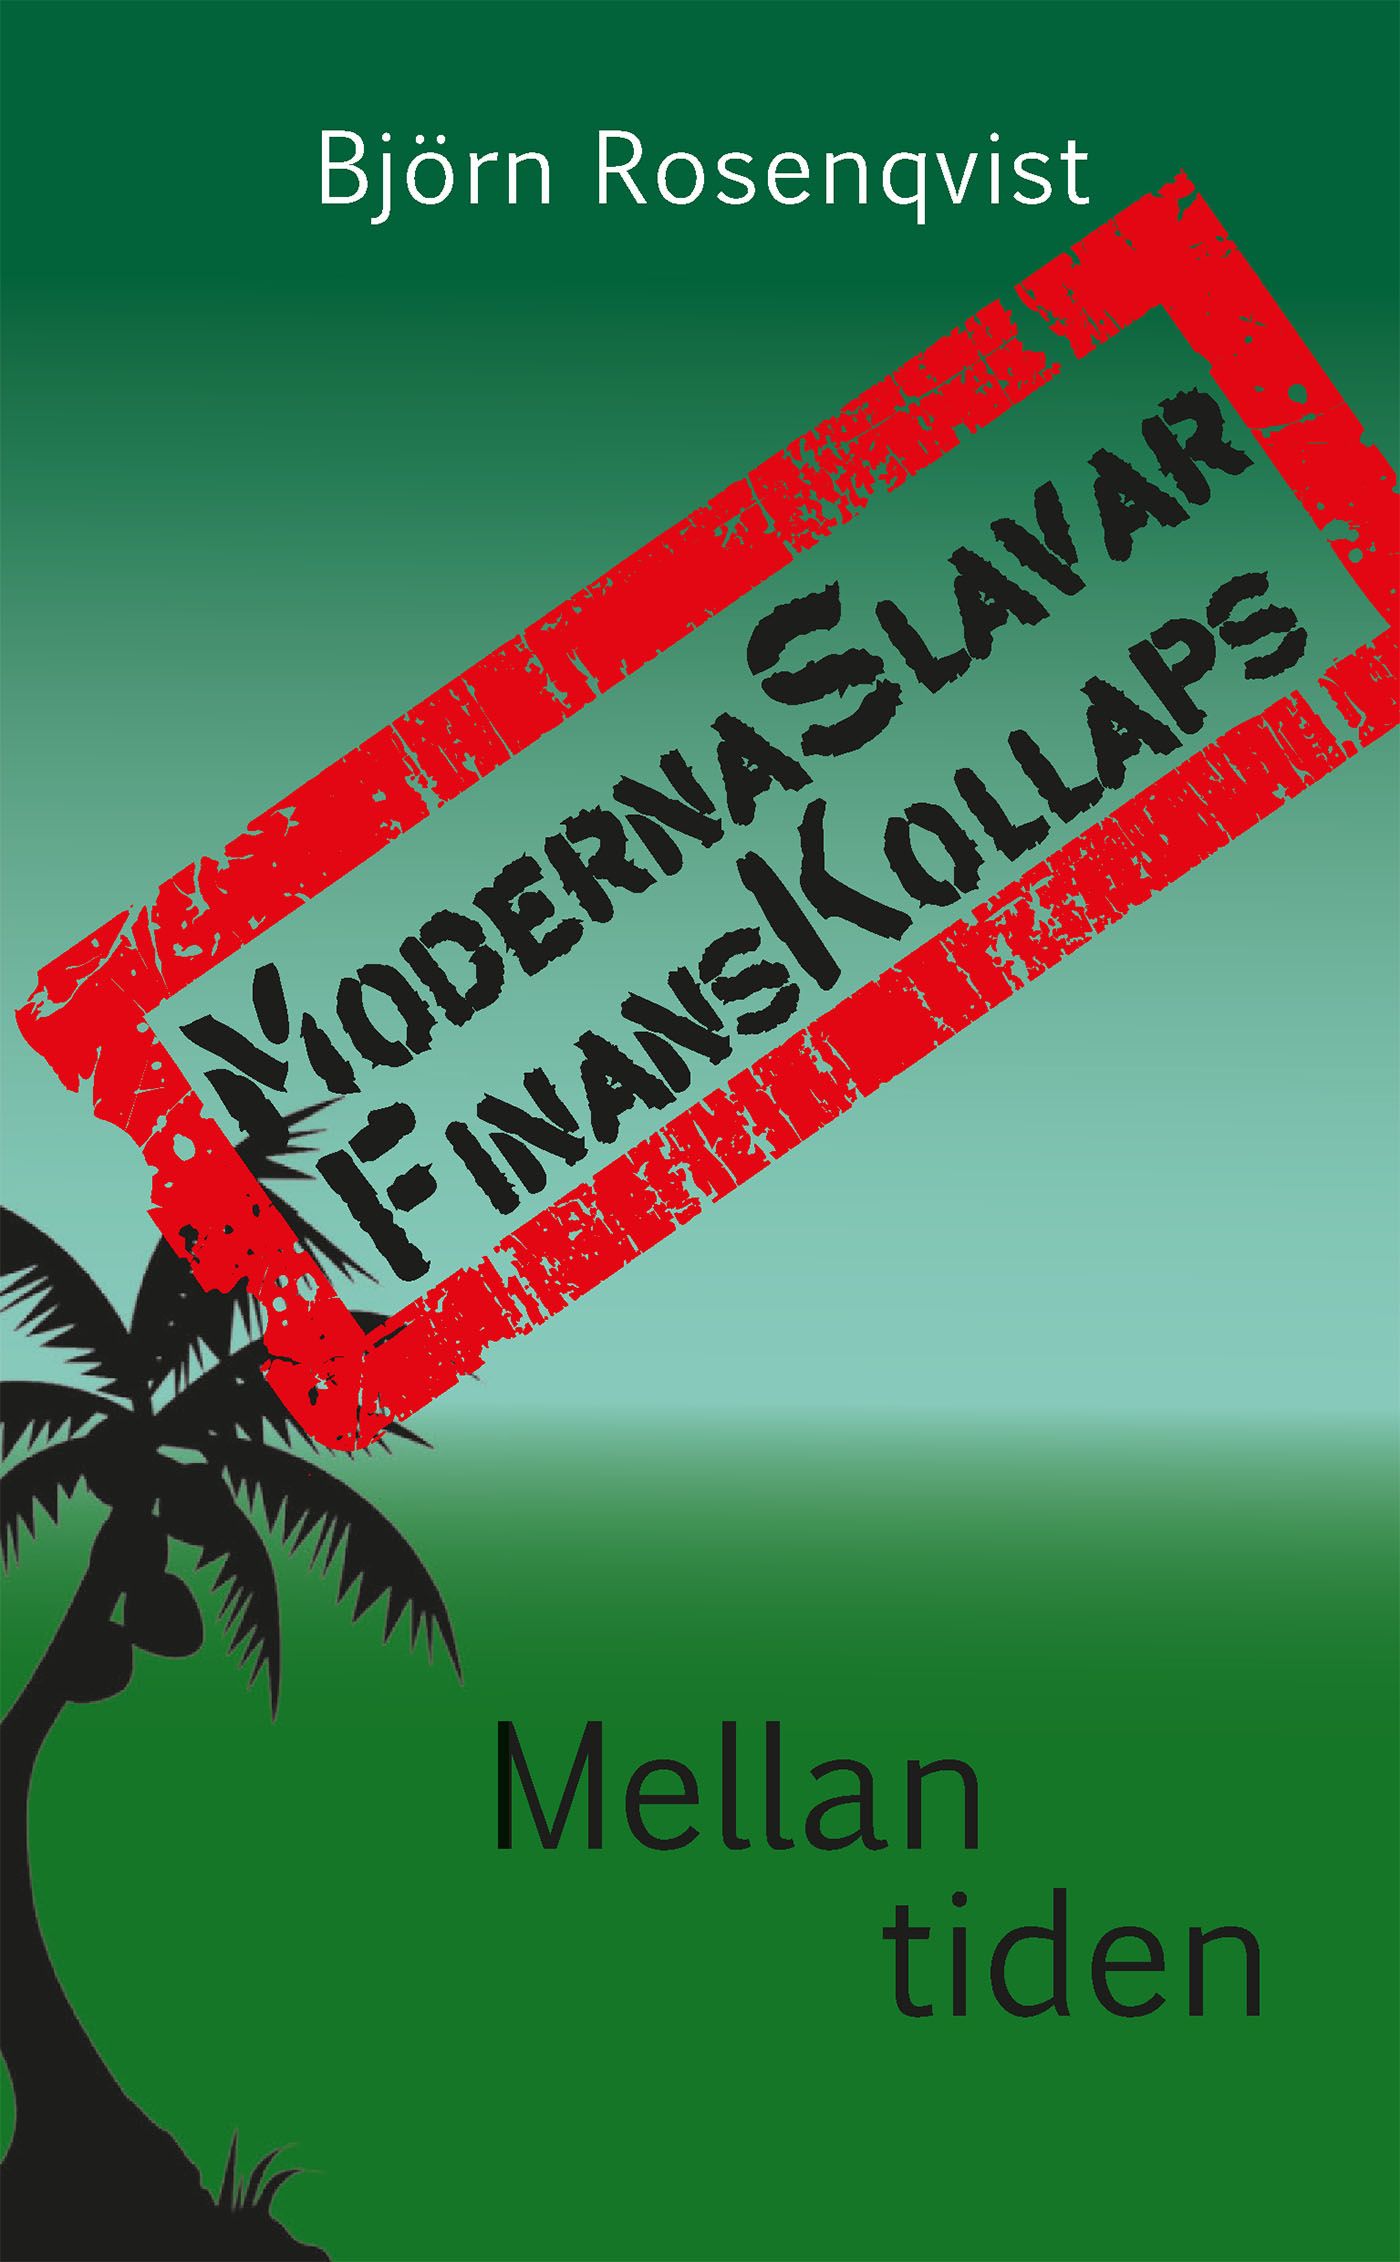 Moderna Slavar - FinansKollaps, andra upplagan, e-bog af Björn Rosenqvist